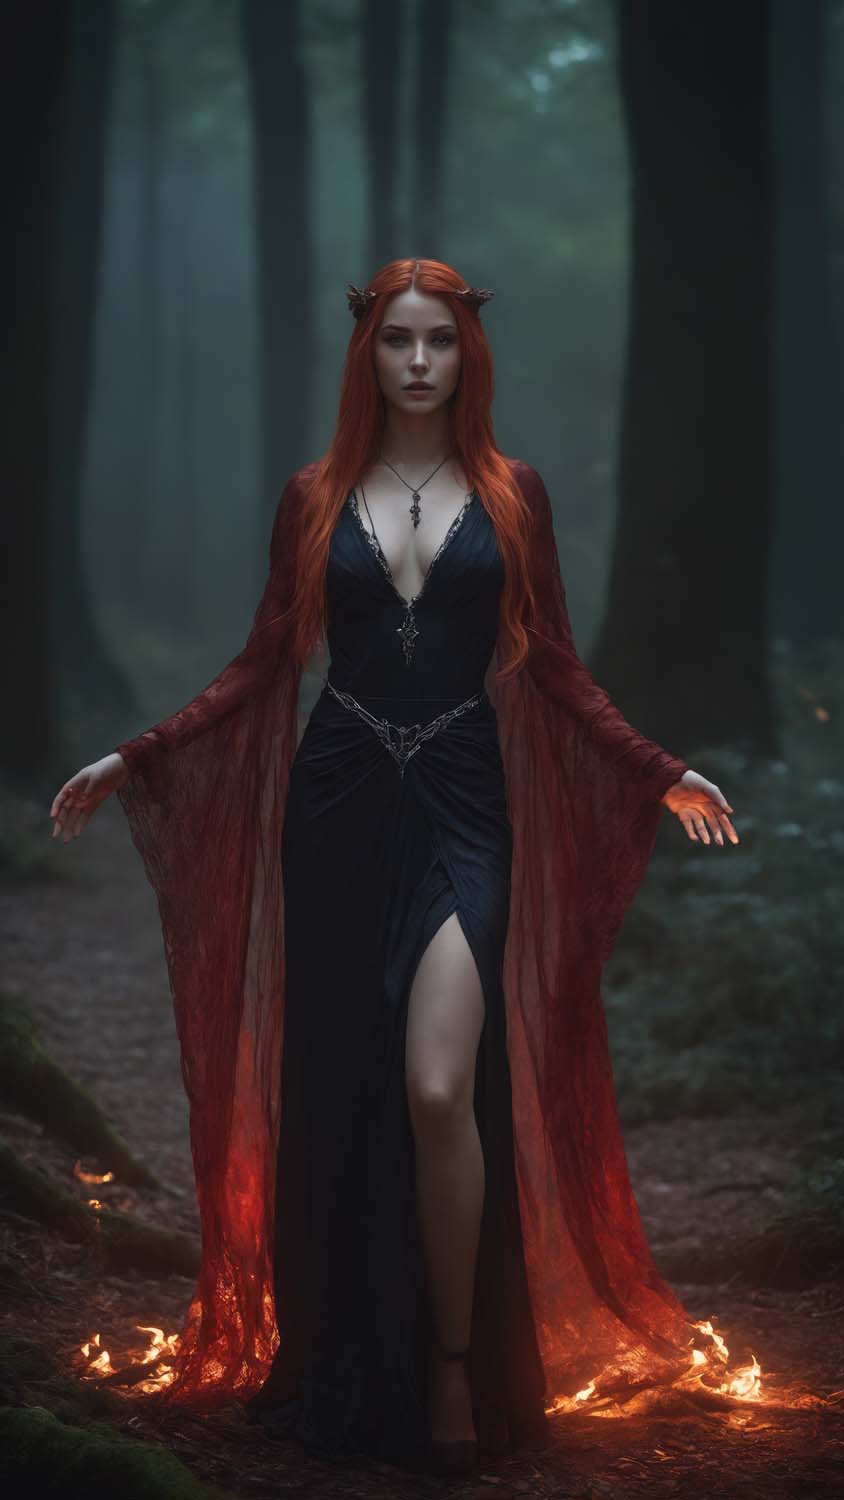 Dreamy fire fantasy girl forest